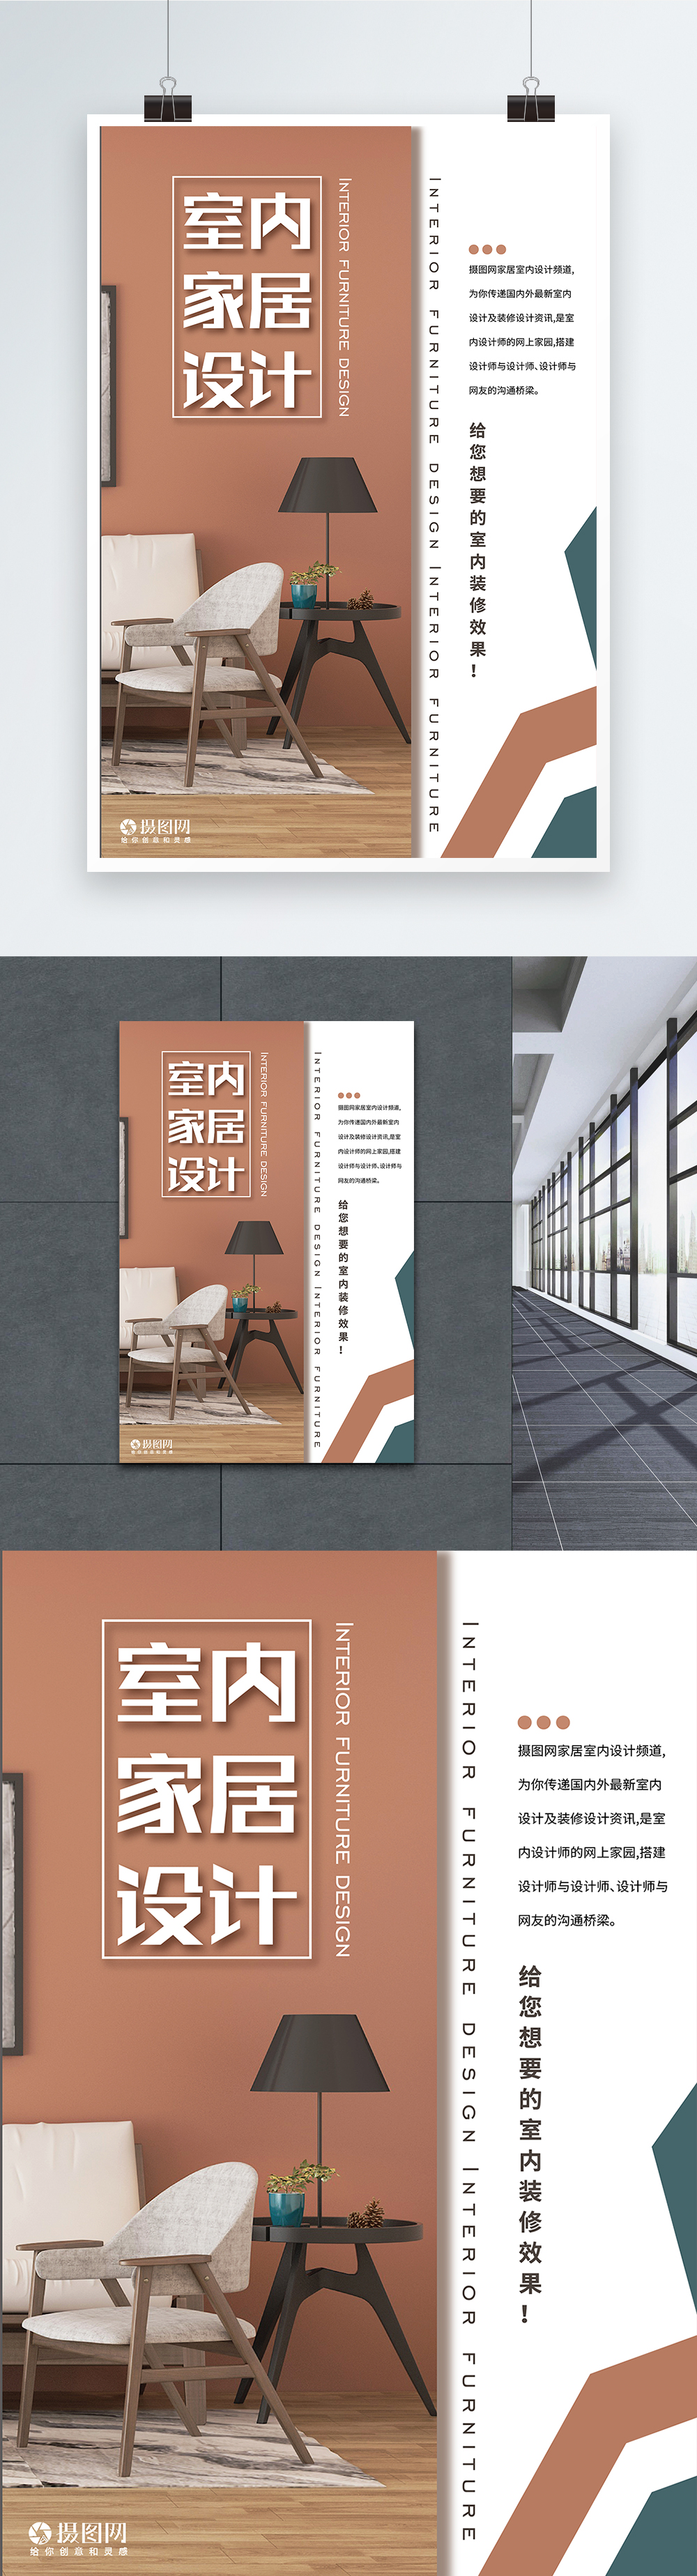 Modern simple retro interior design poster design template image